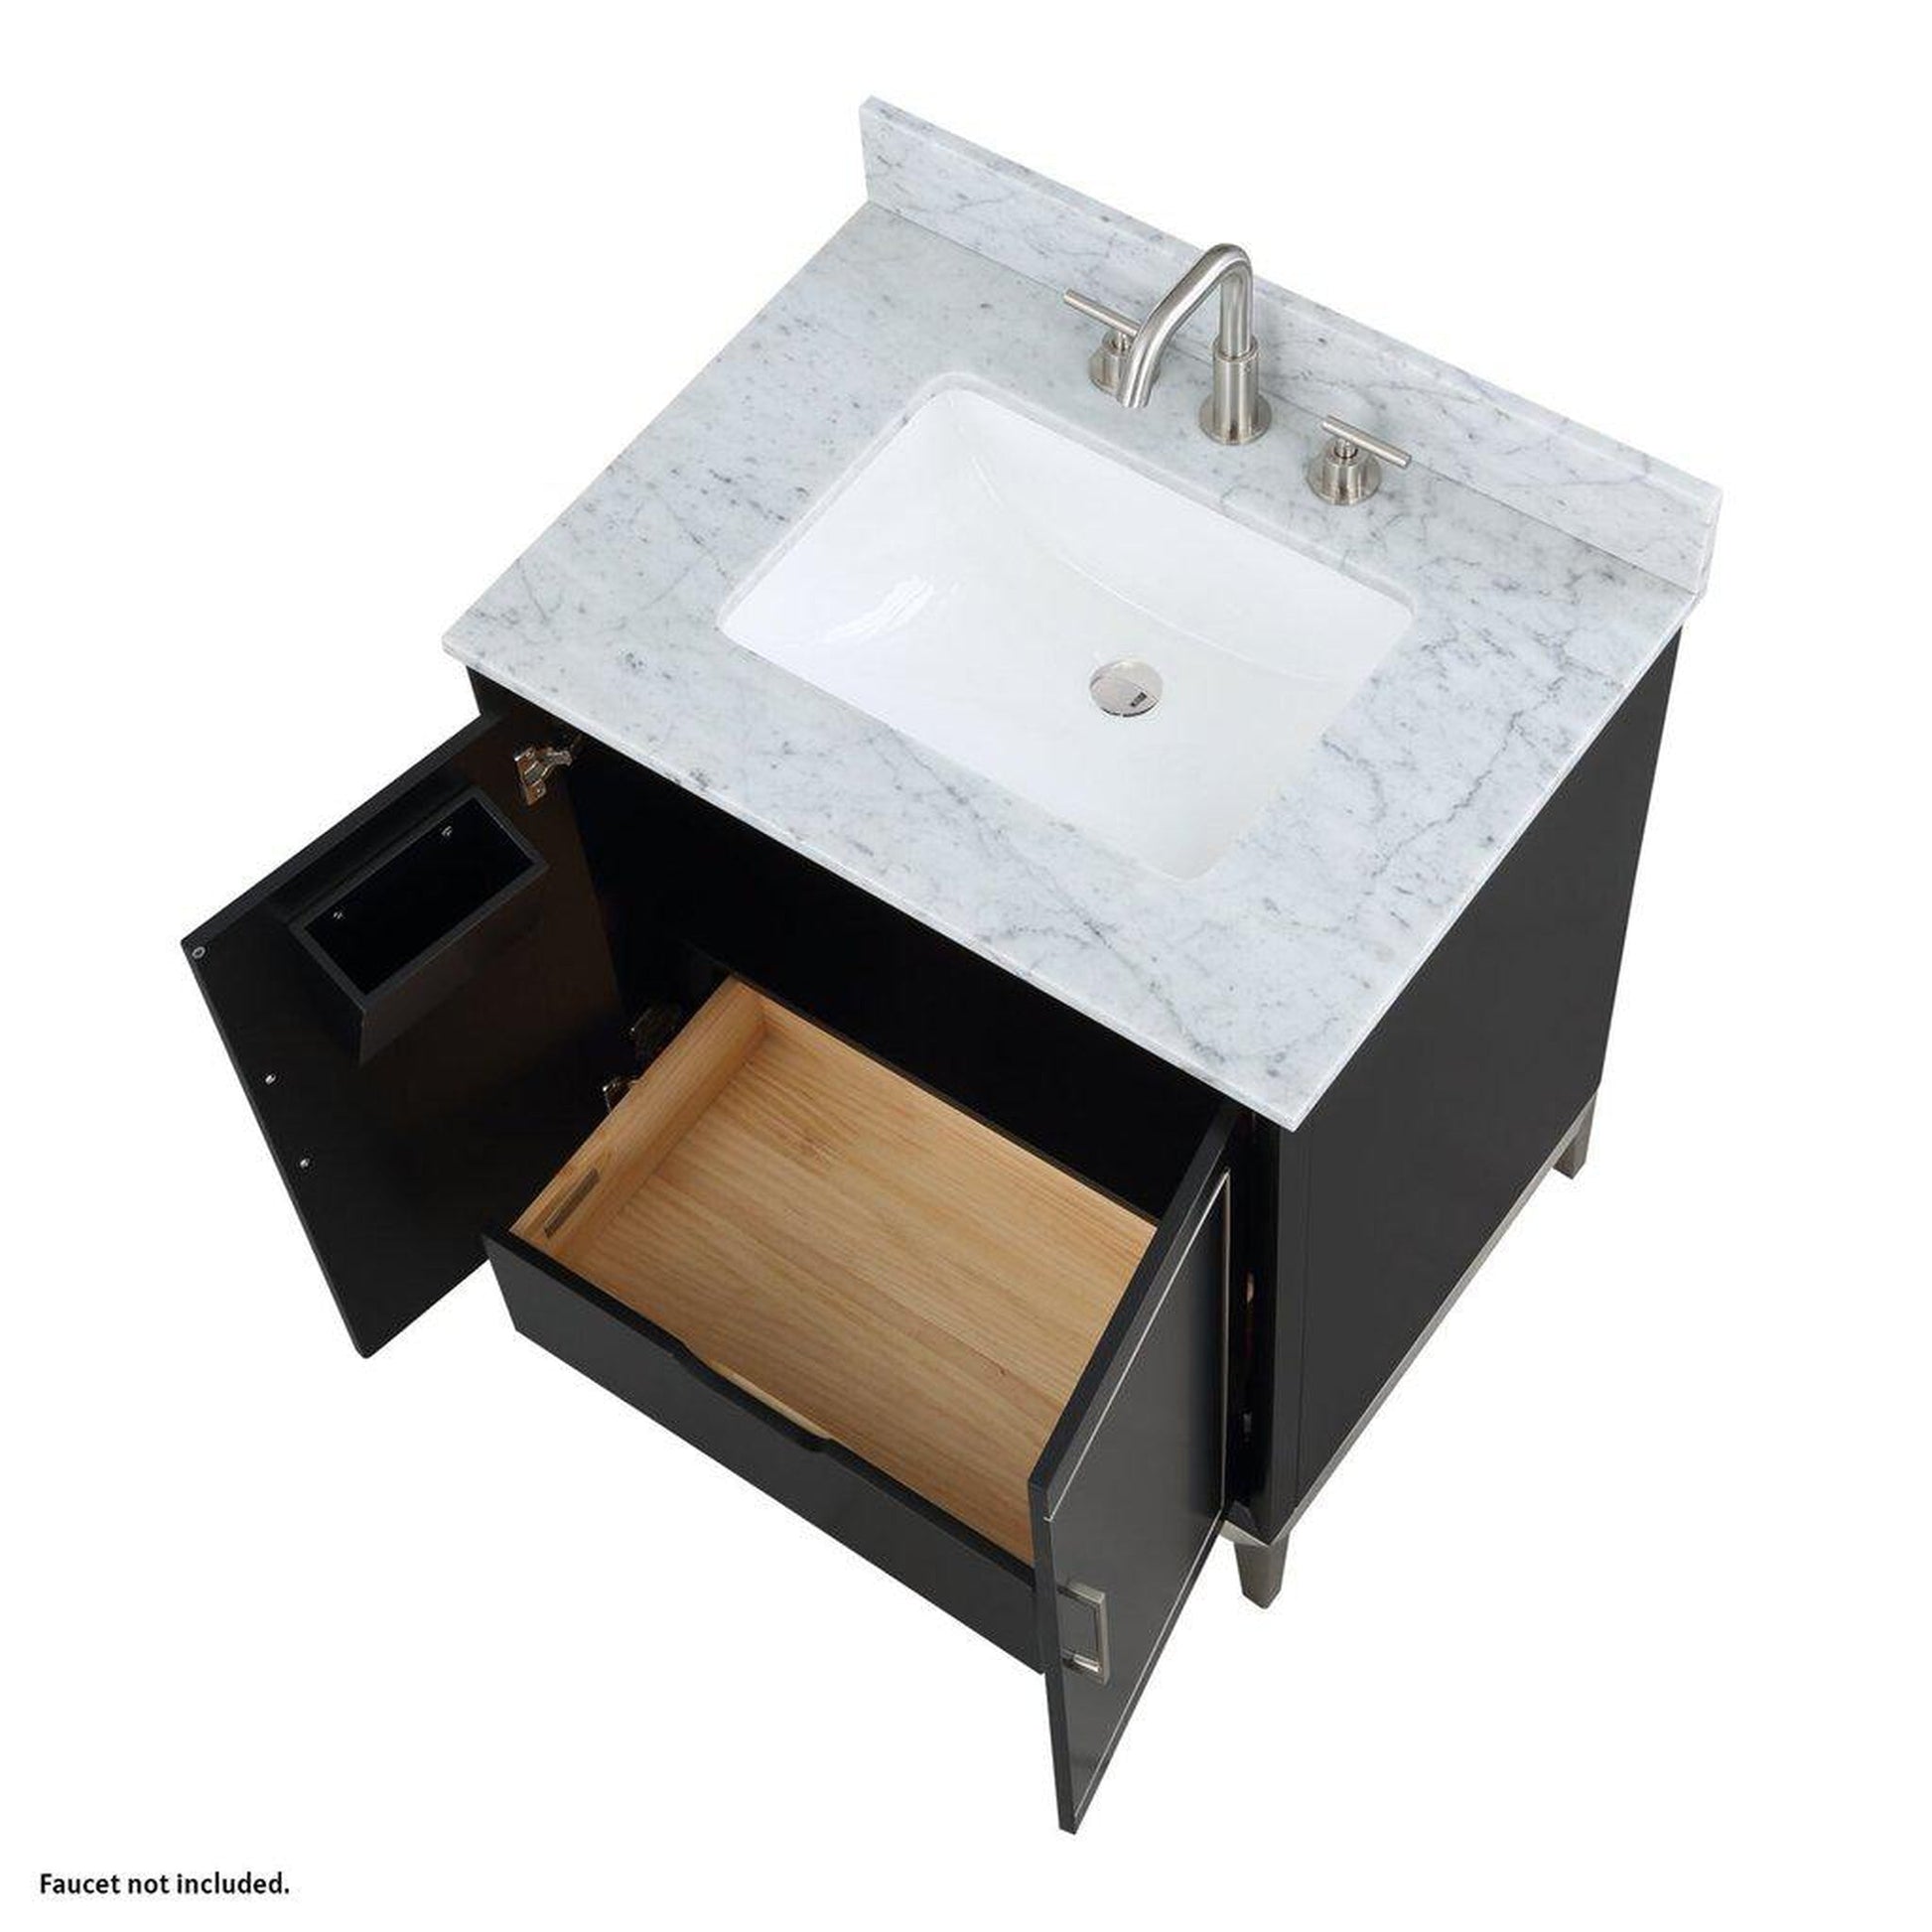 Bemma Design Gracie 30" Midnight Black Solid Wood Freestanding Bathroom Vanity With Single 3-Hole Italian Carra Marble Vanity Top, Rectangle Undermount Sink, Backsplash and Brushed Nickel Trim